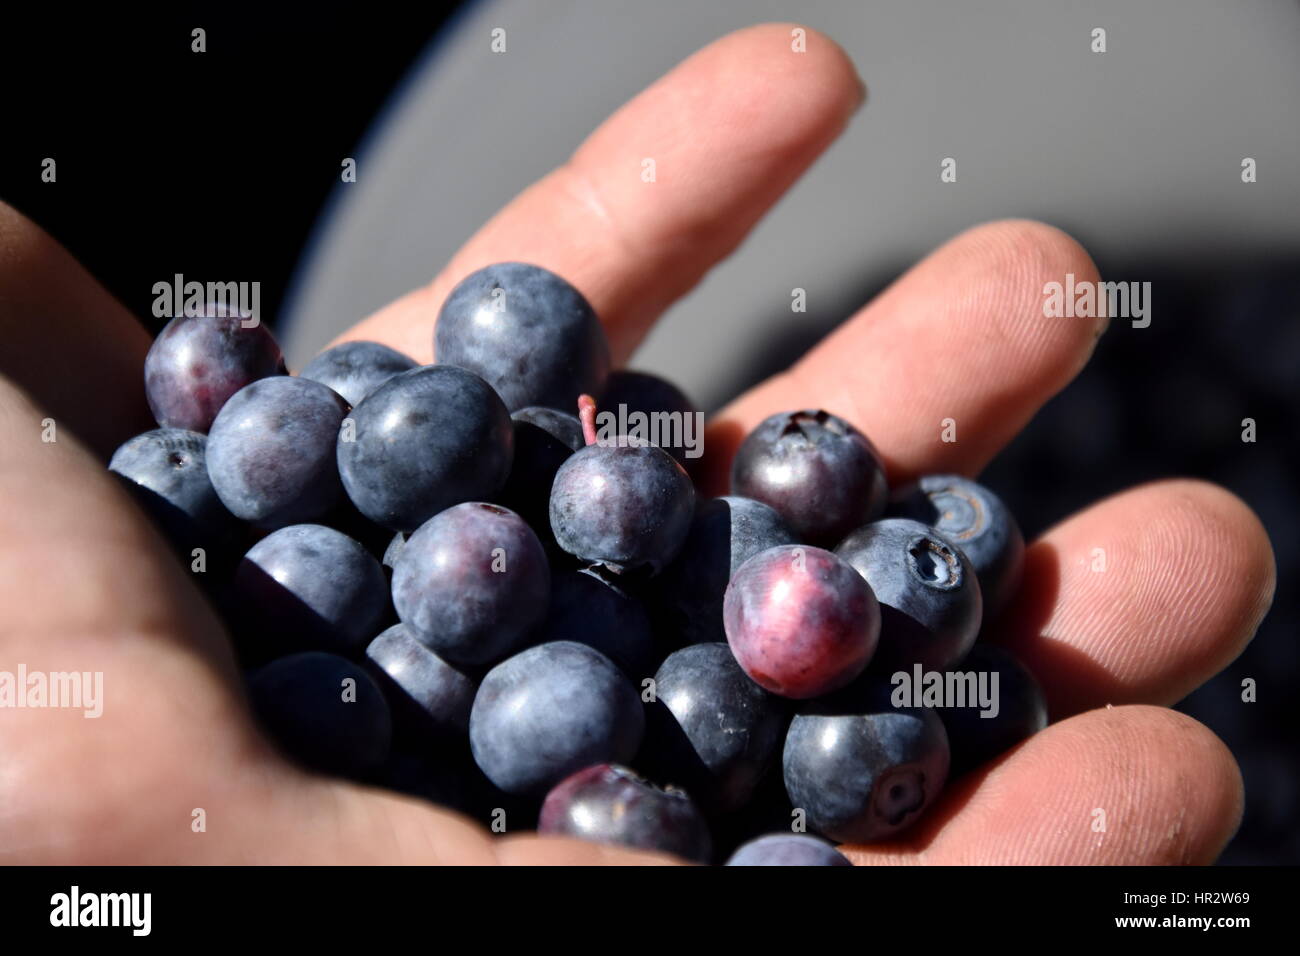 Hand holding bunch of blueberries. Freshly picked wild blueberries. Fresh Blueberries or Bilberries. Group of blueberry or stack of blueberries concep Stock Photo